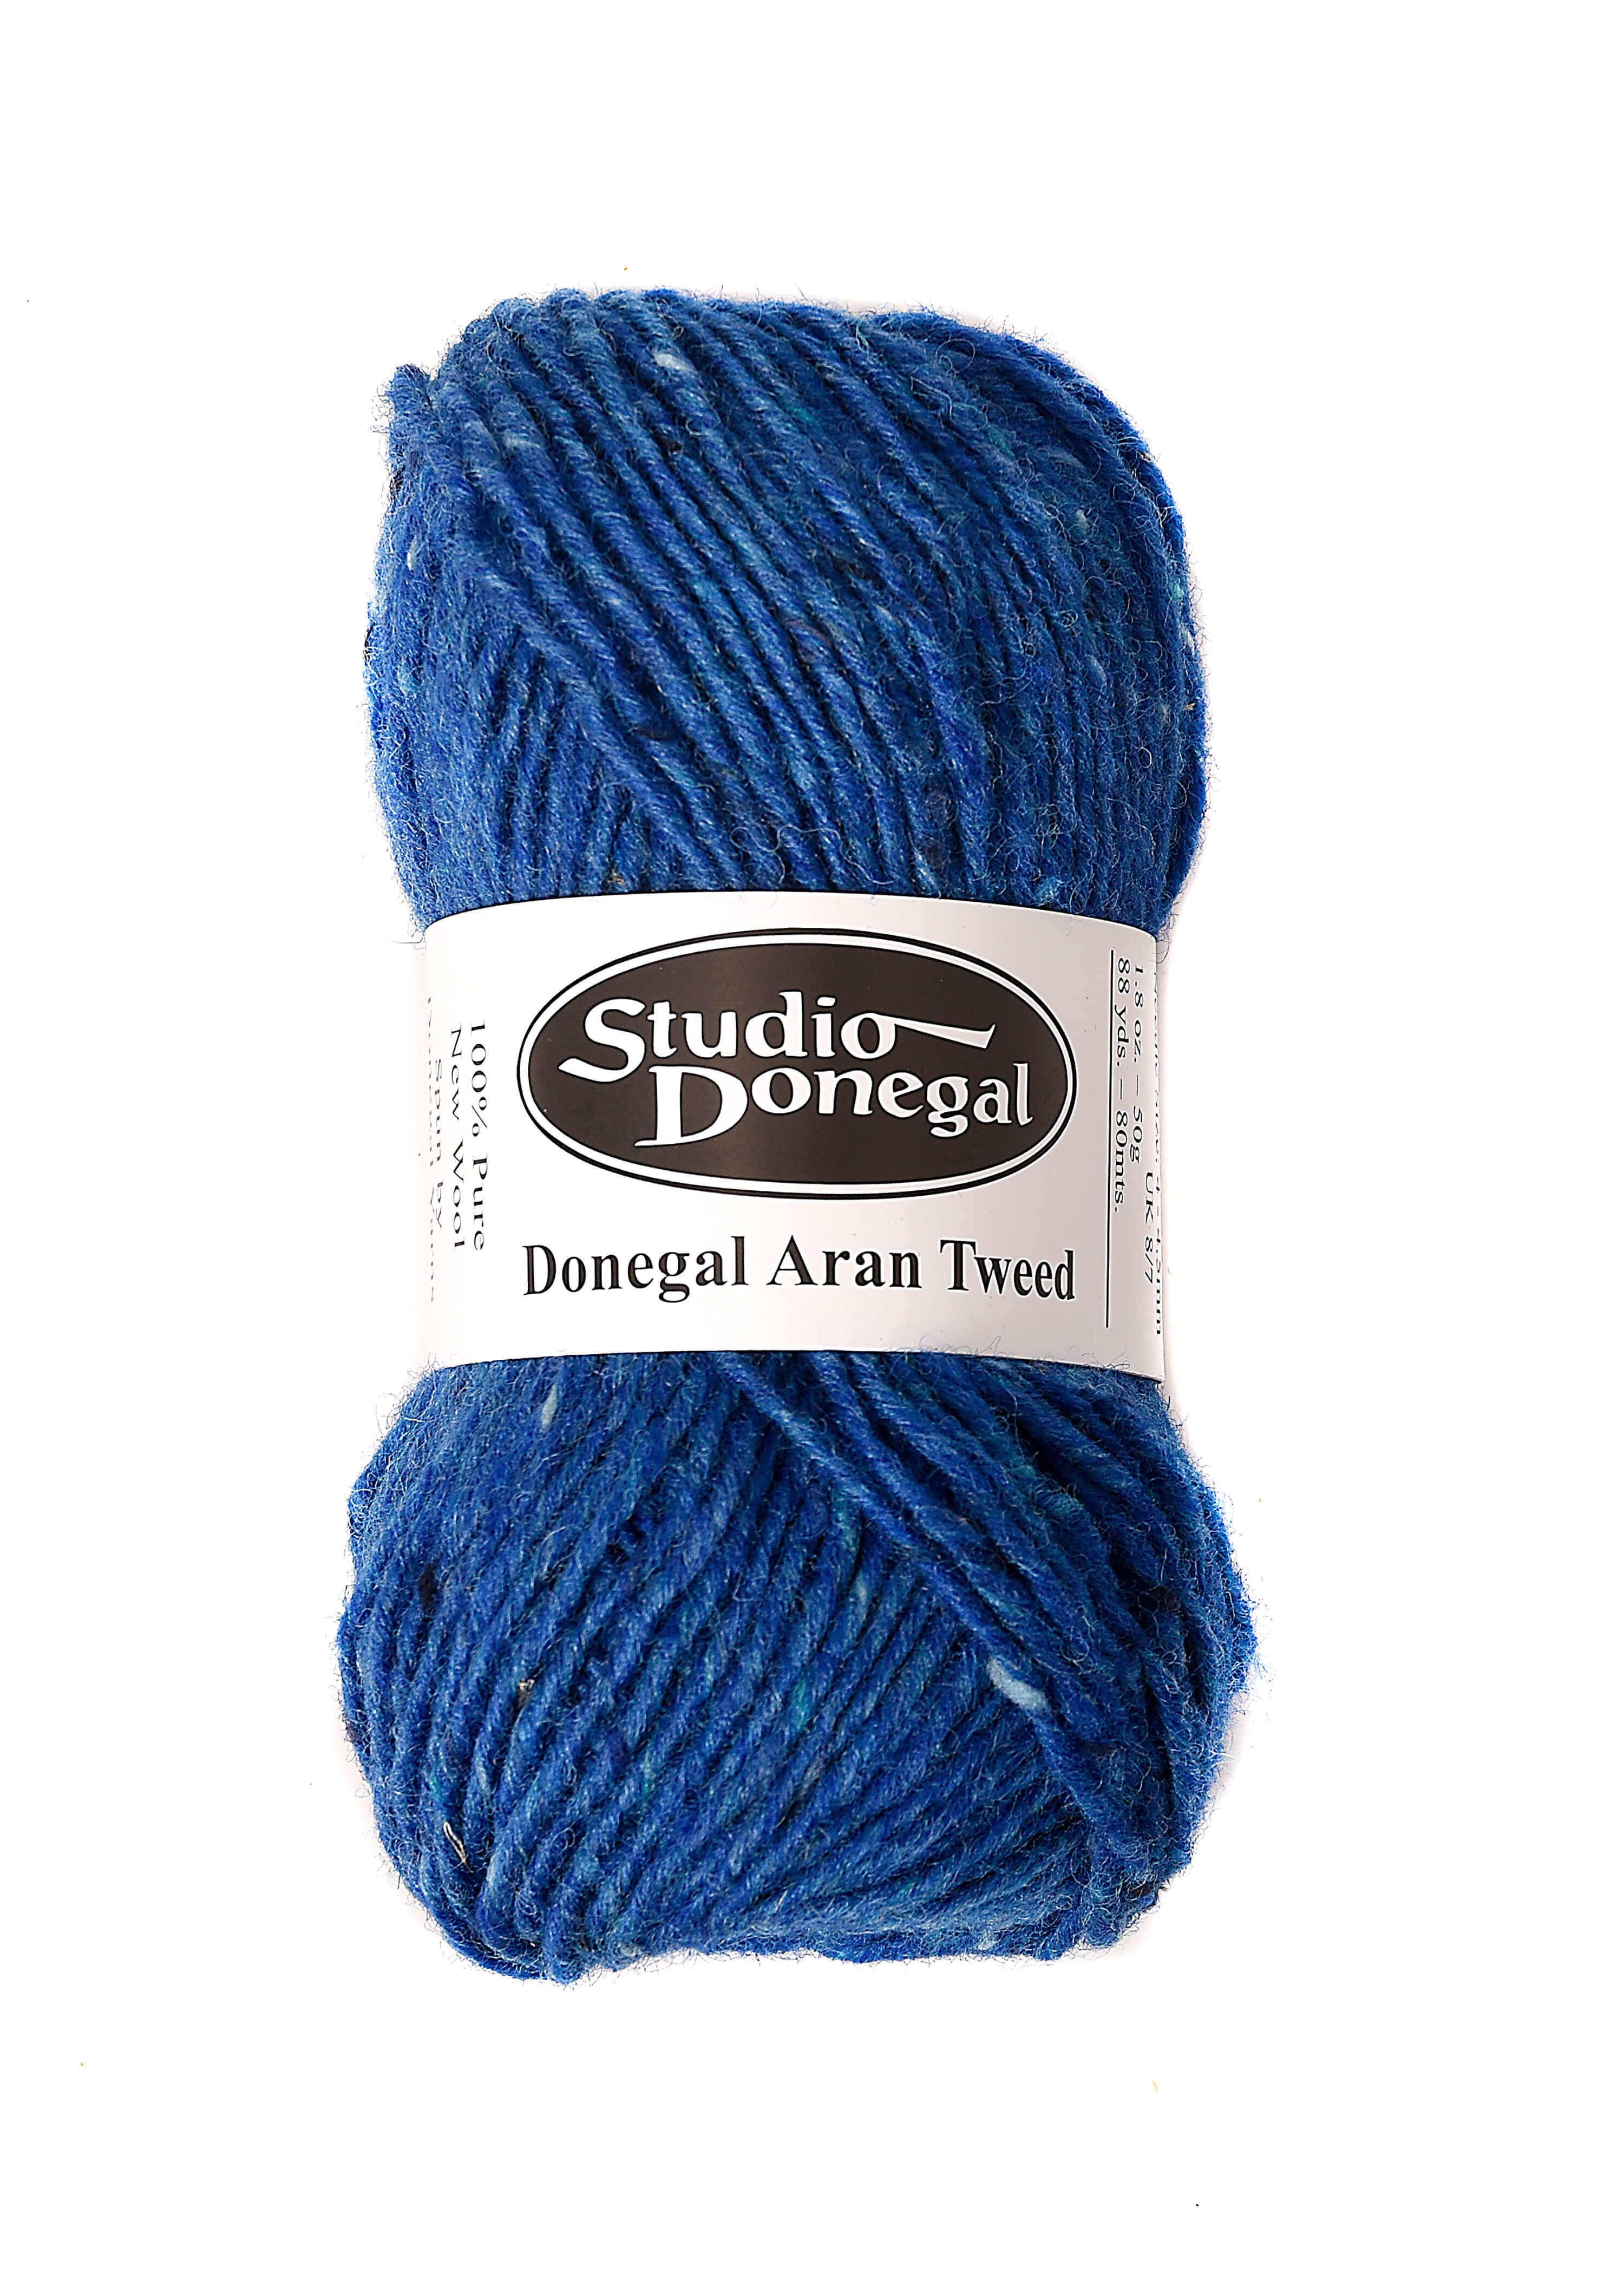 50g Ball of Aran Tweed Knitting Wool Colour: 4896